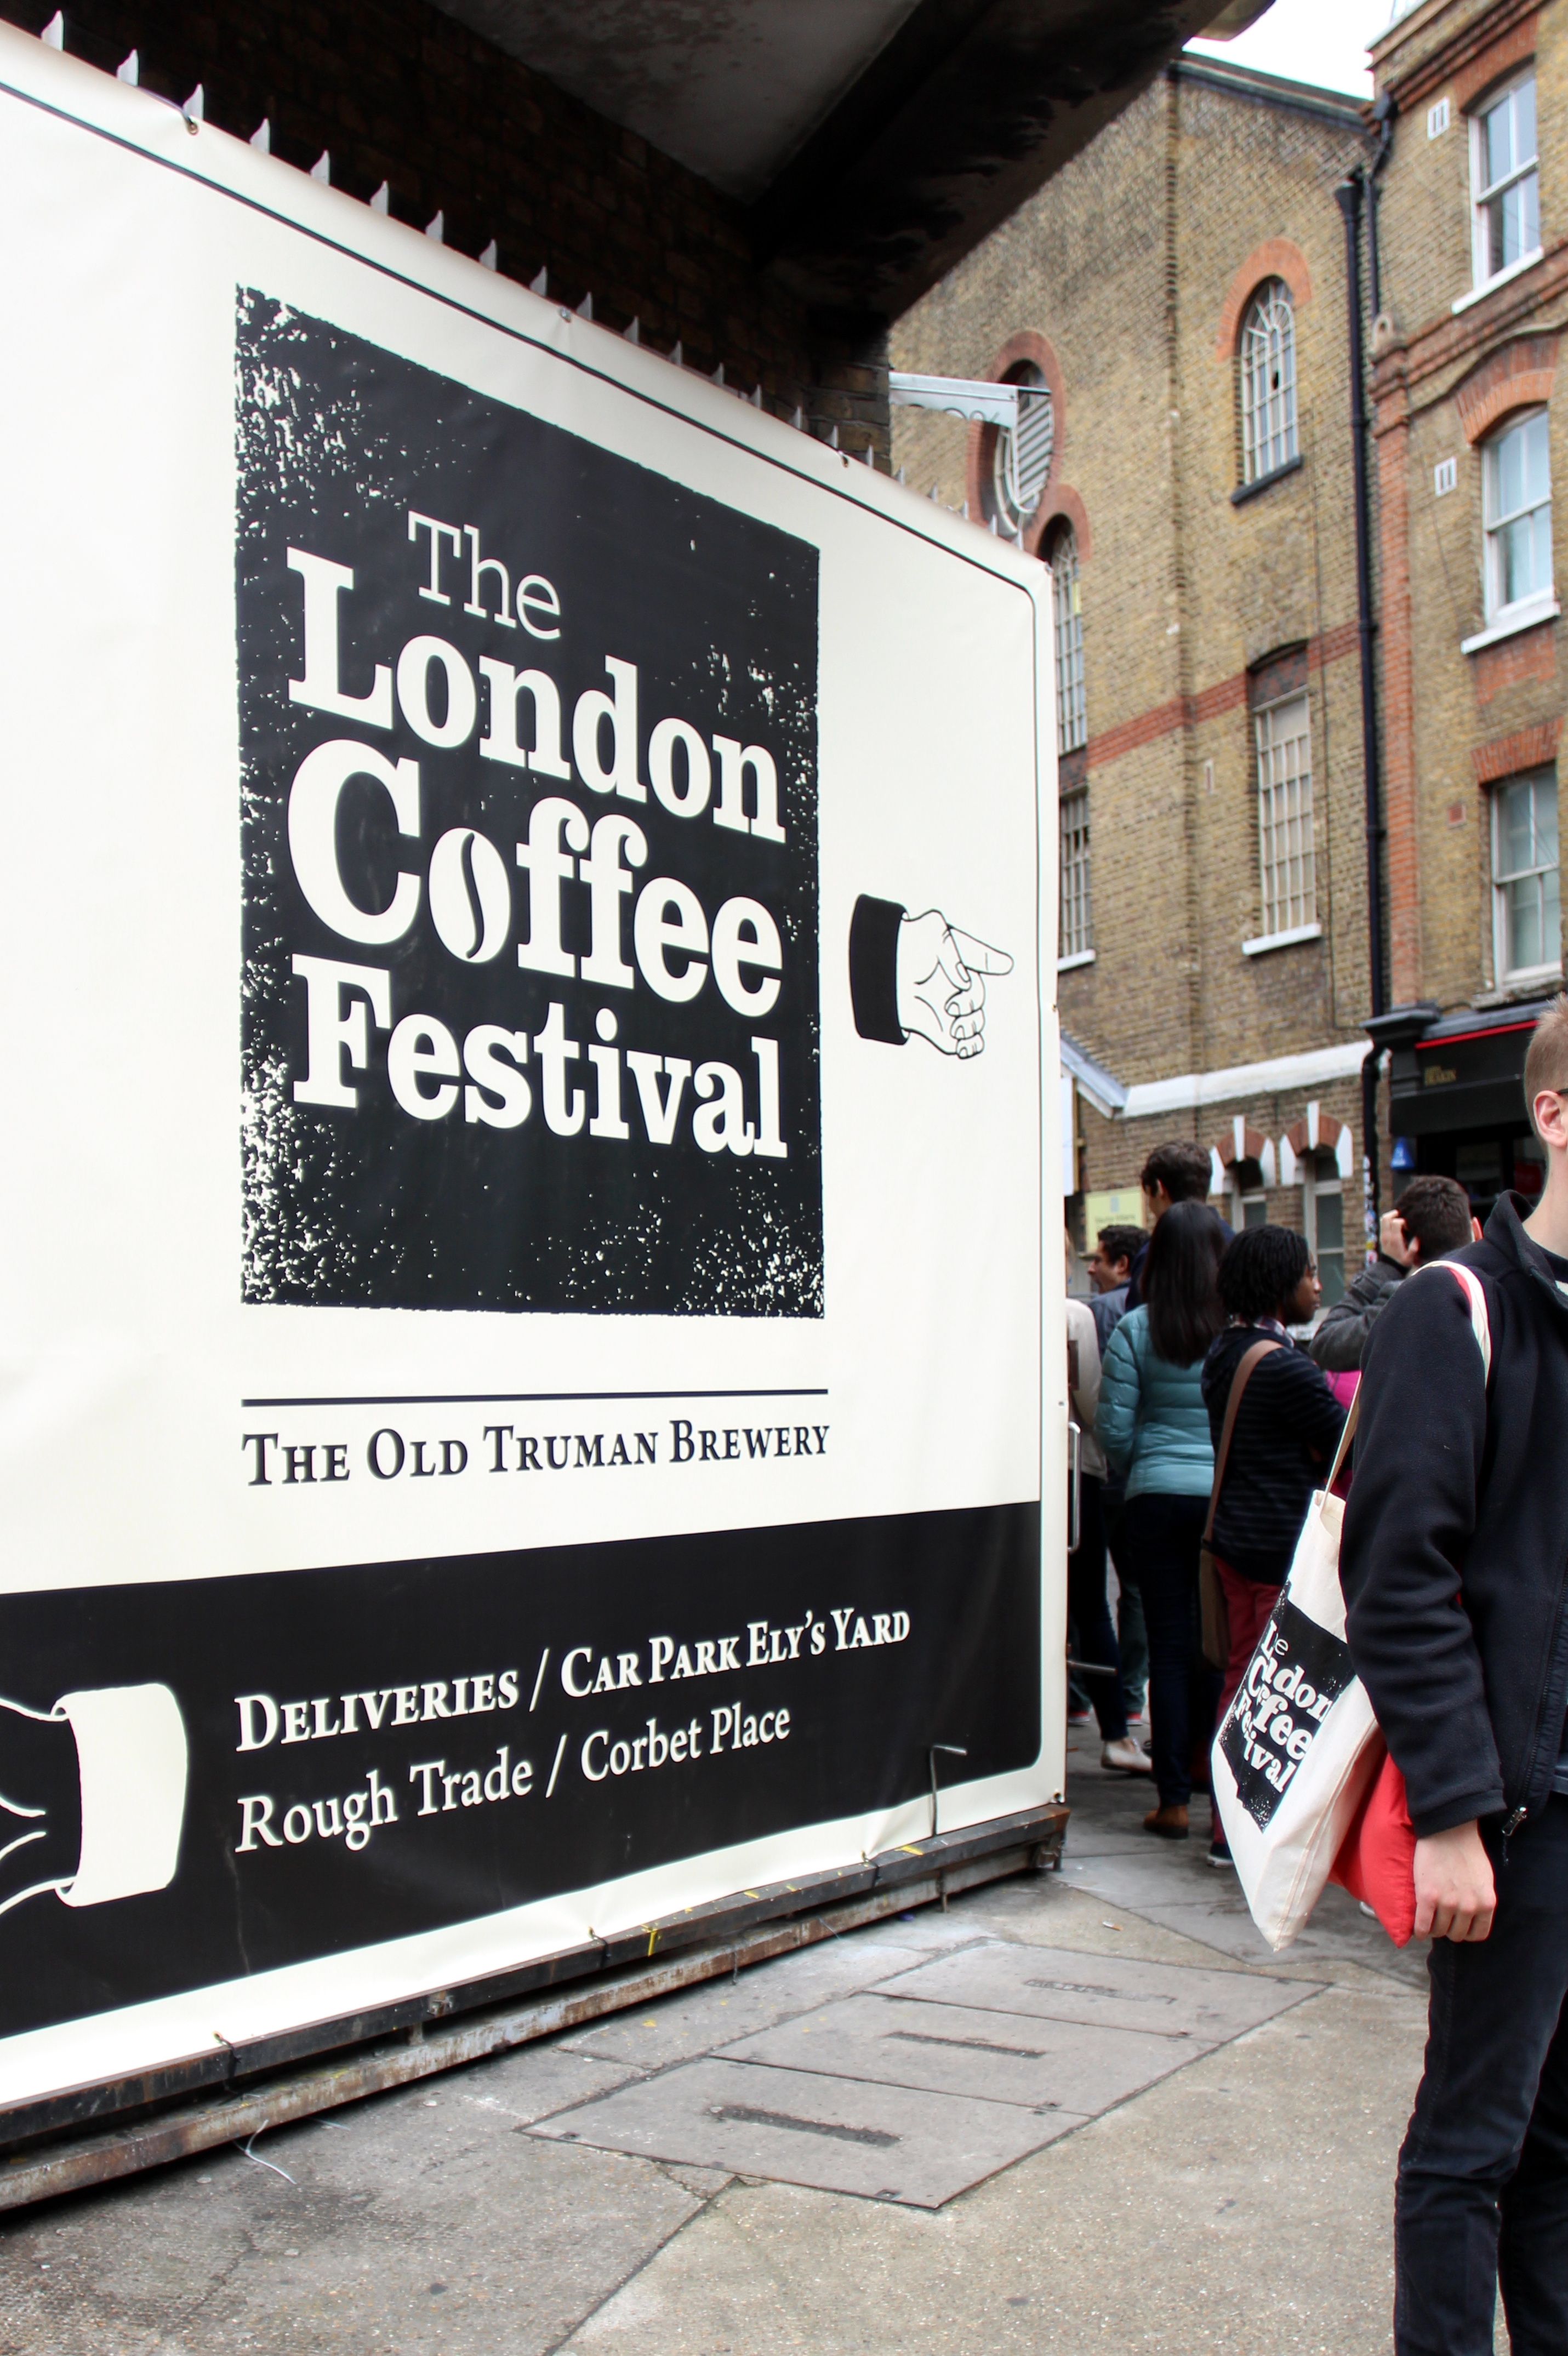 London Coffee Festival